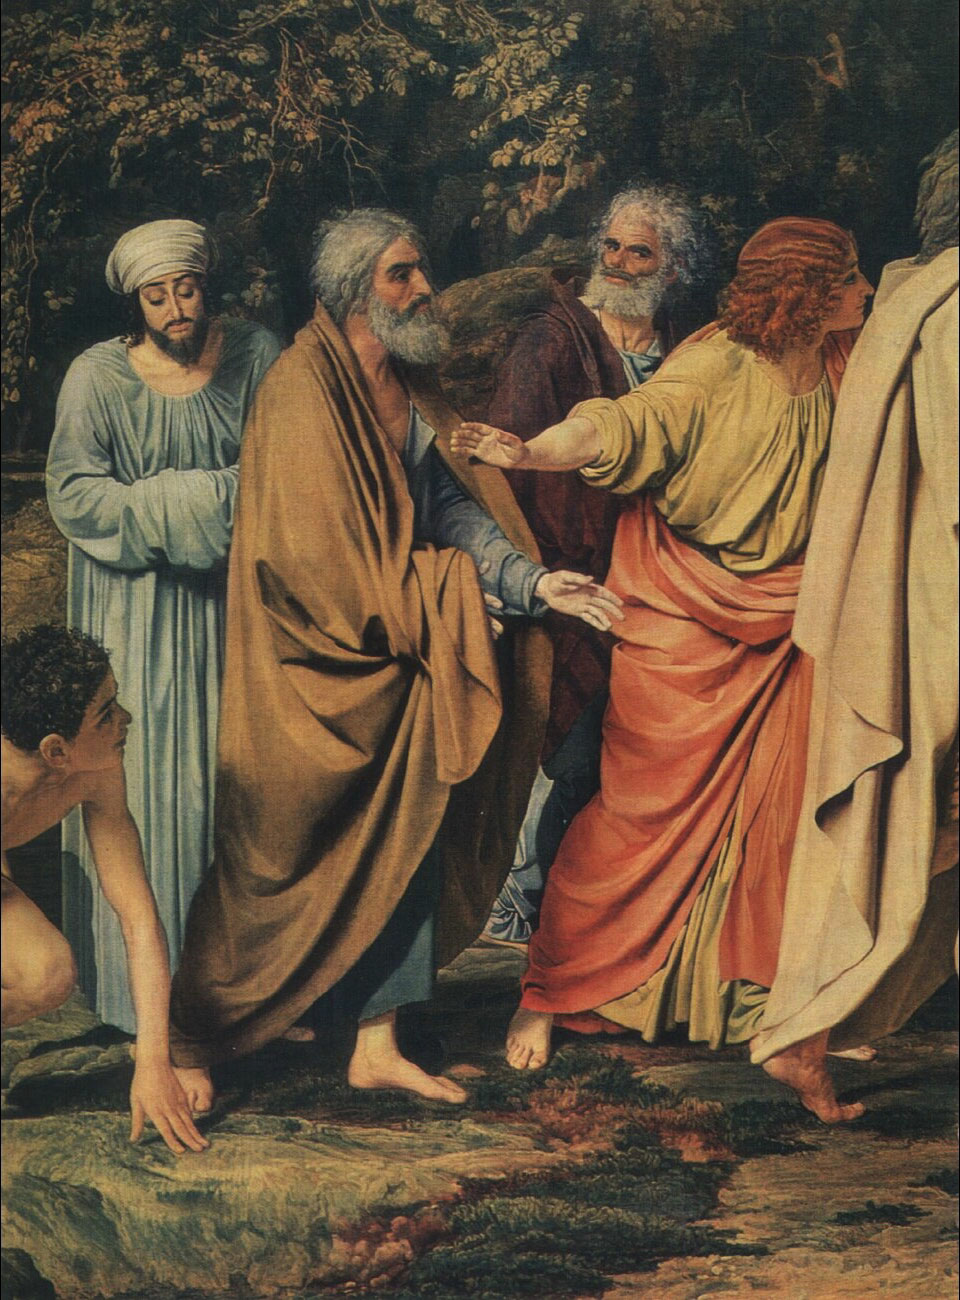 Картина явление христа народу. Иванов явление Христа народу 1857.